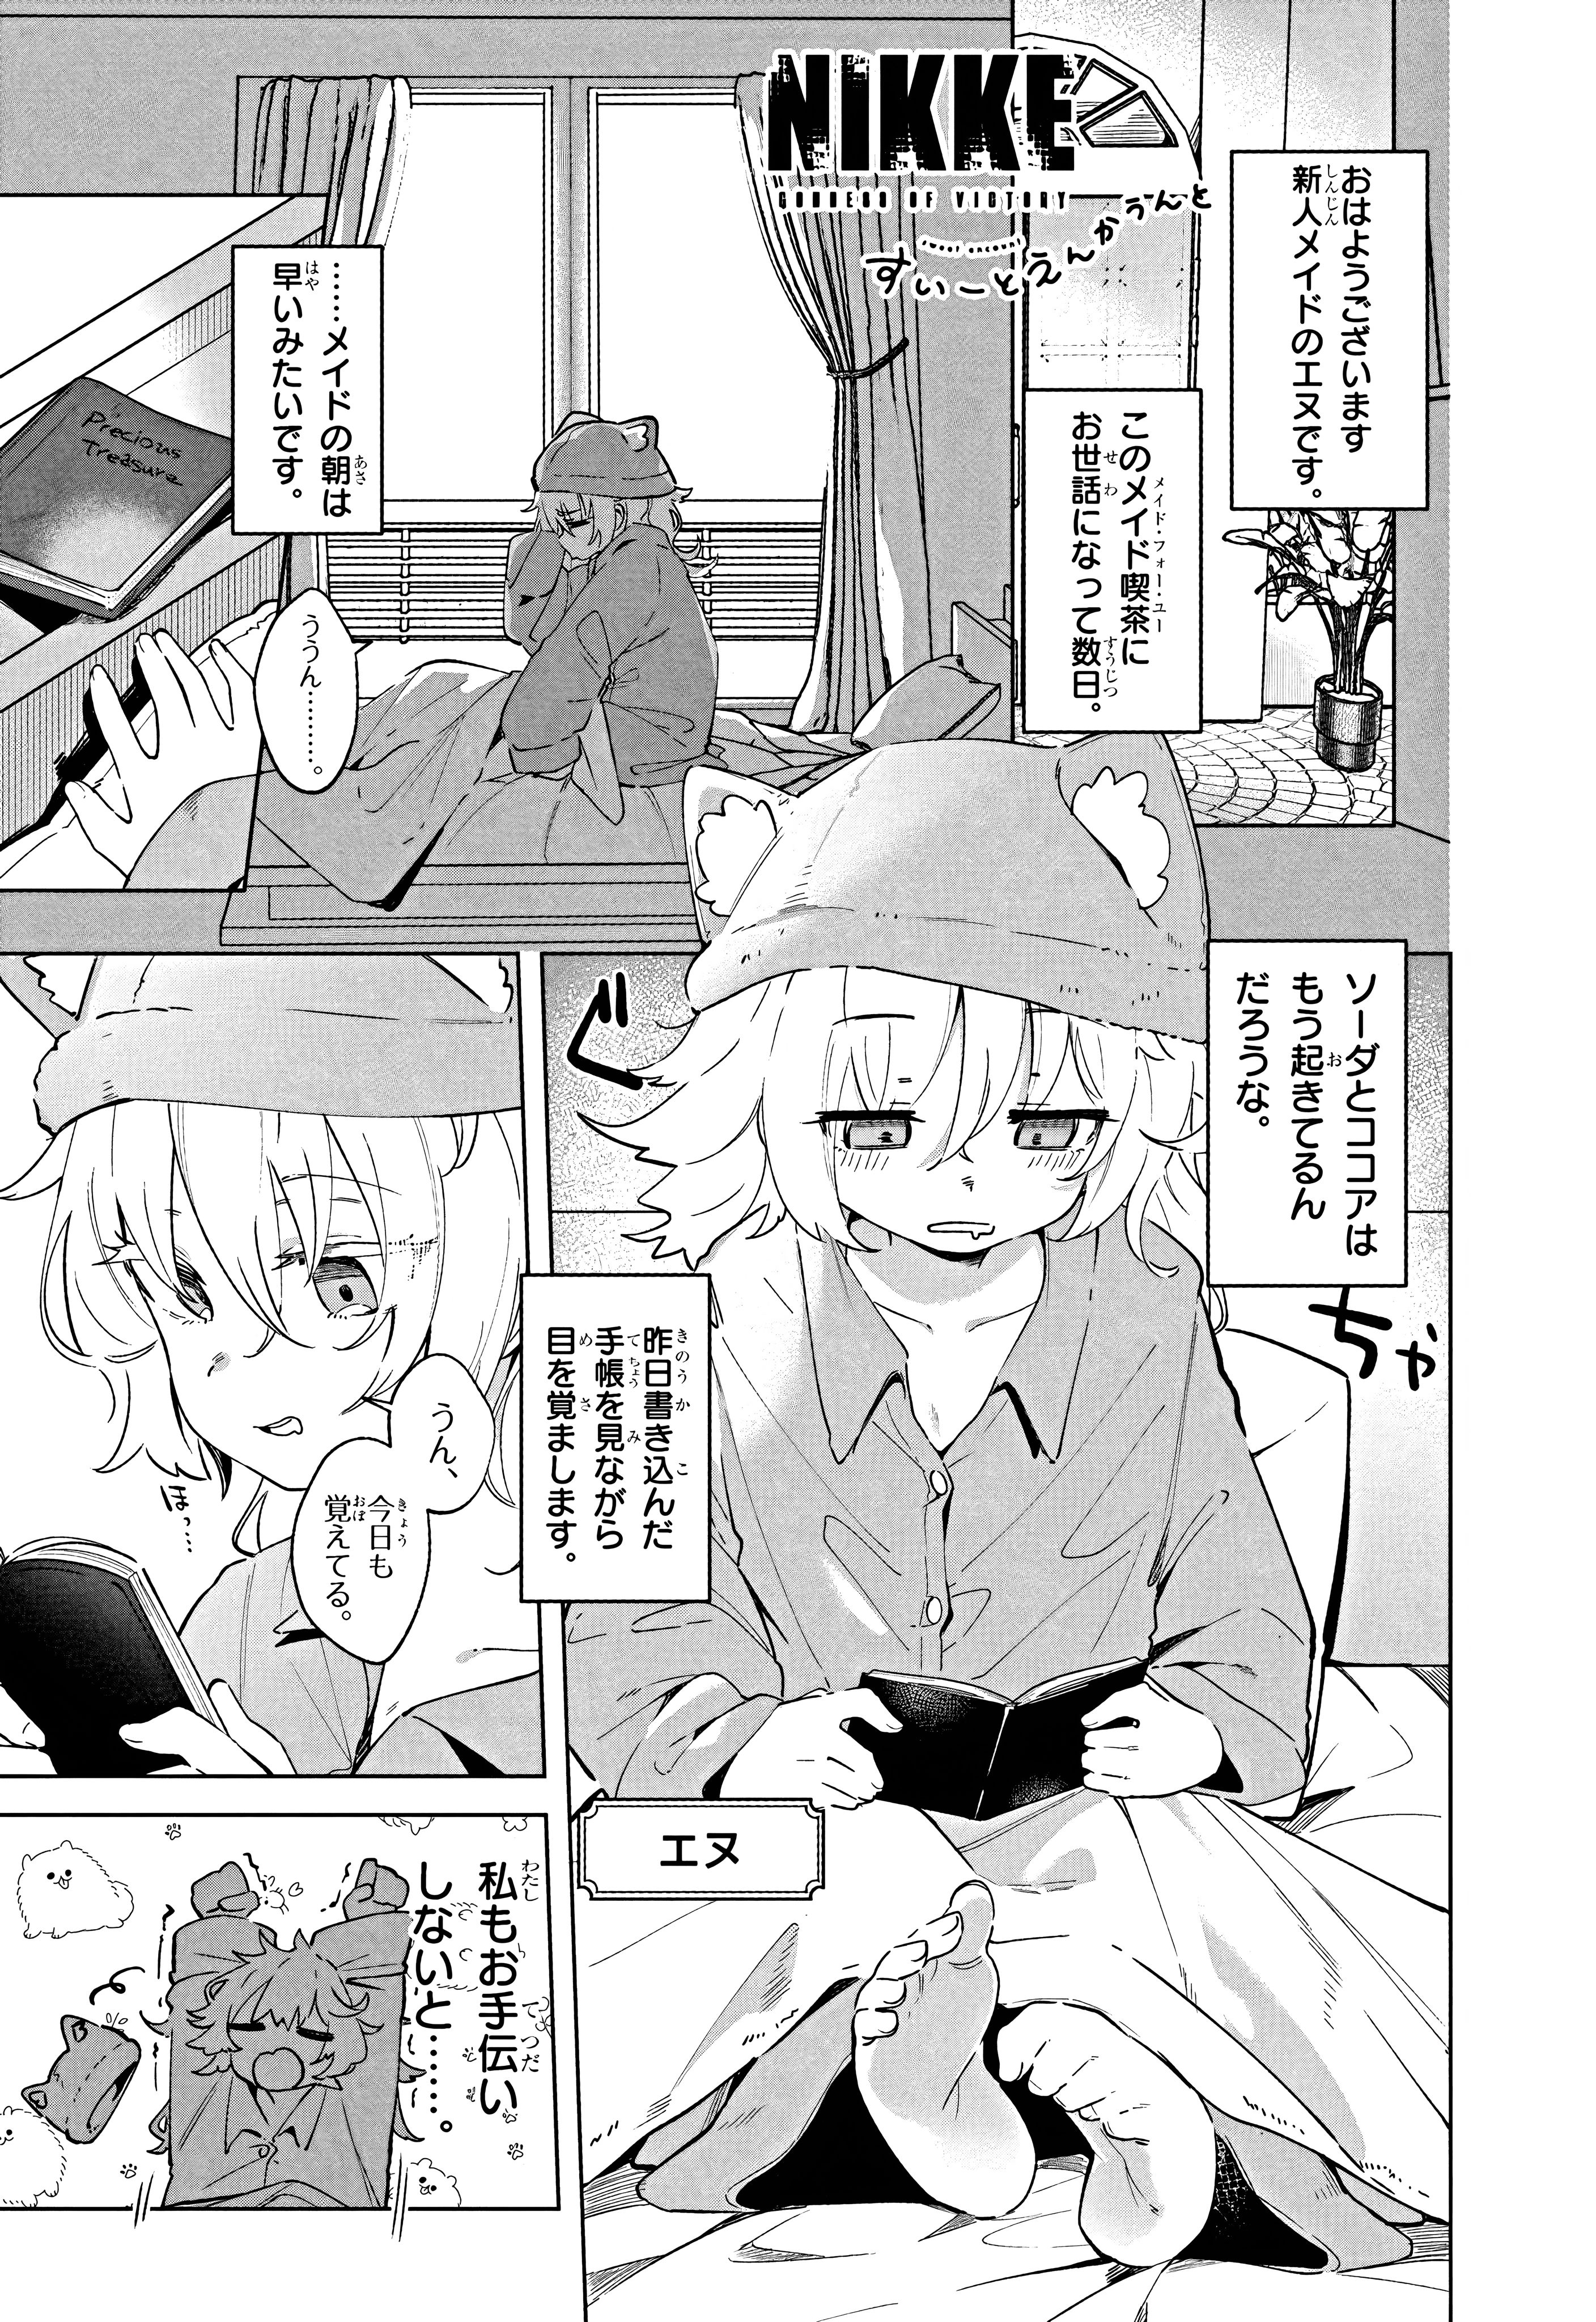 Shouri no Megami: Nikke – Sweet Encounter - Chapter 2 - Page 1